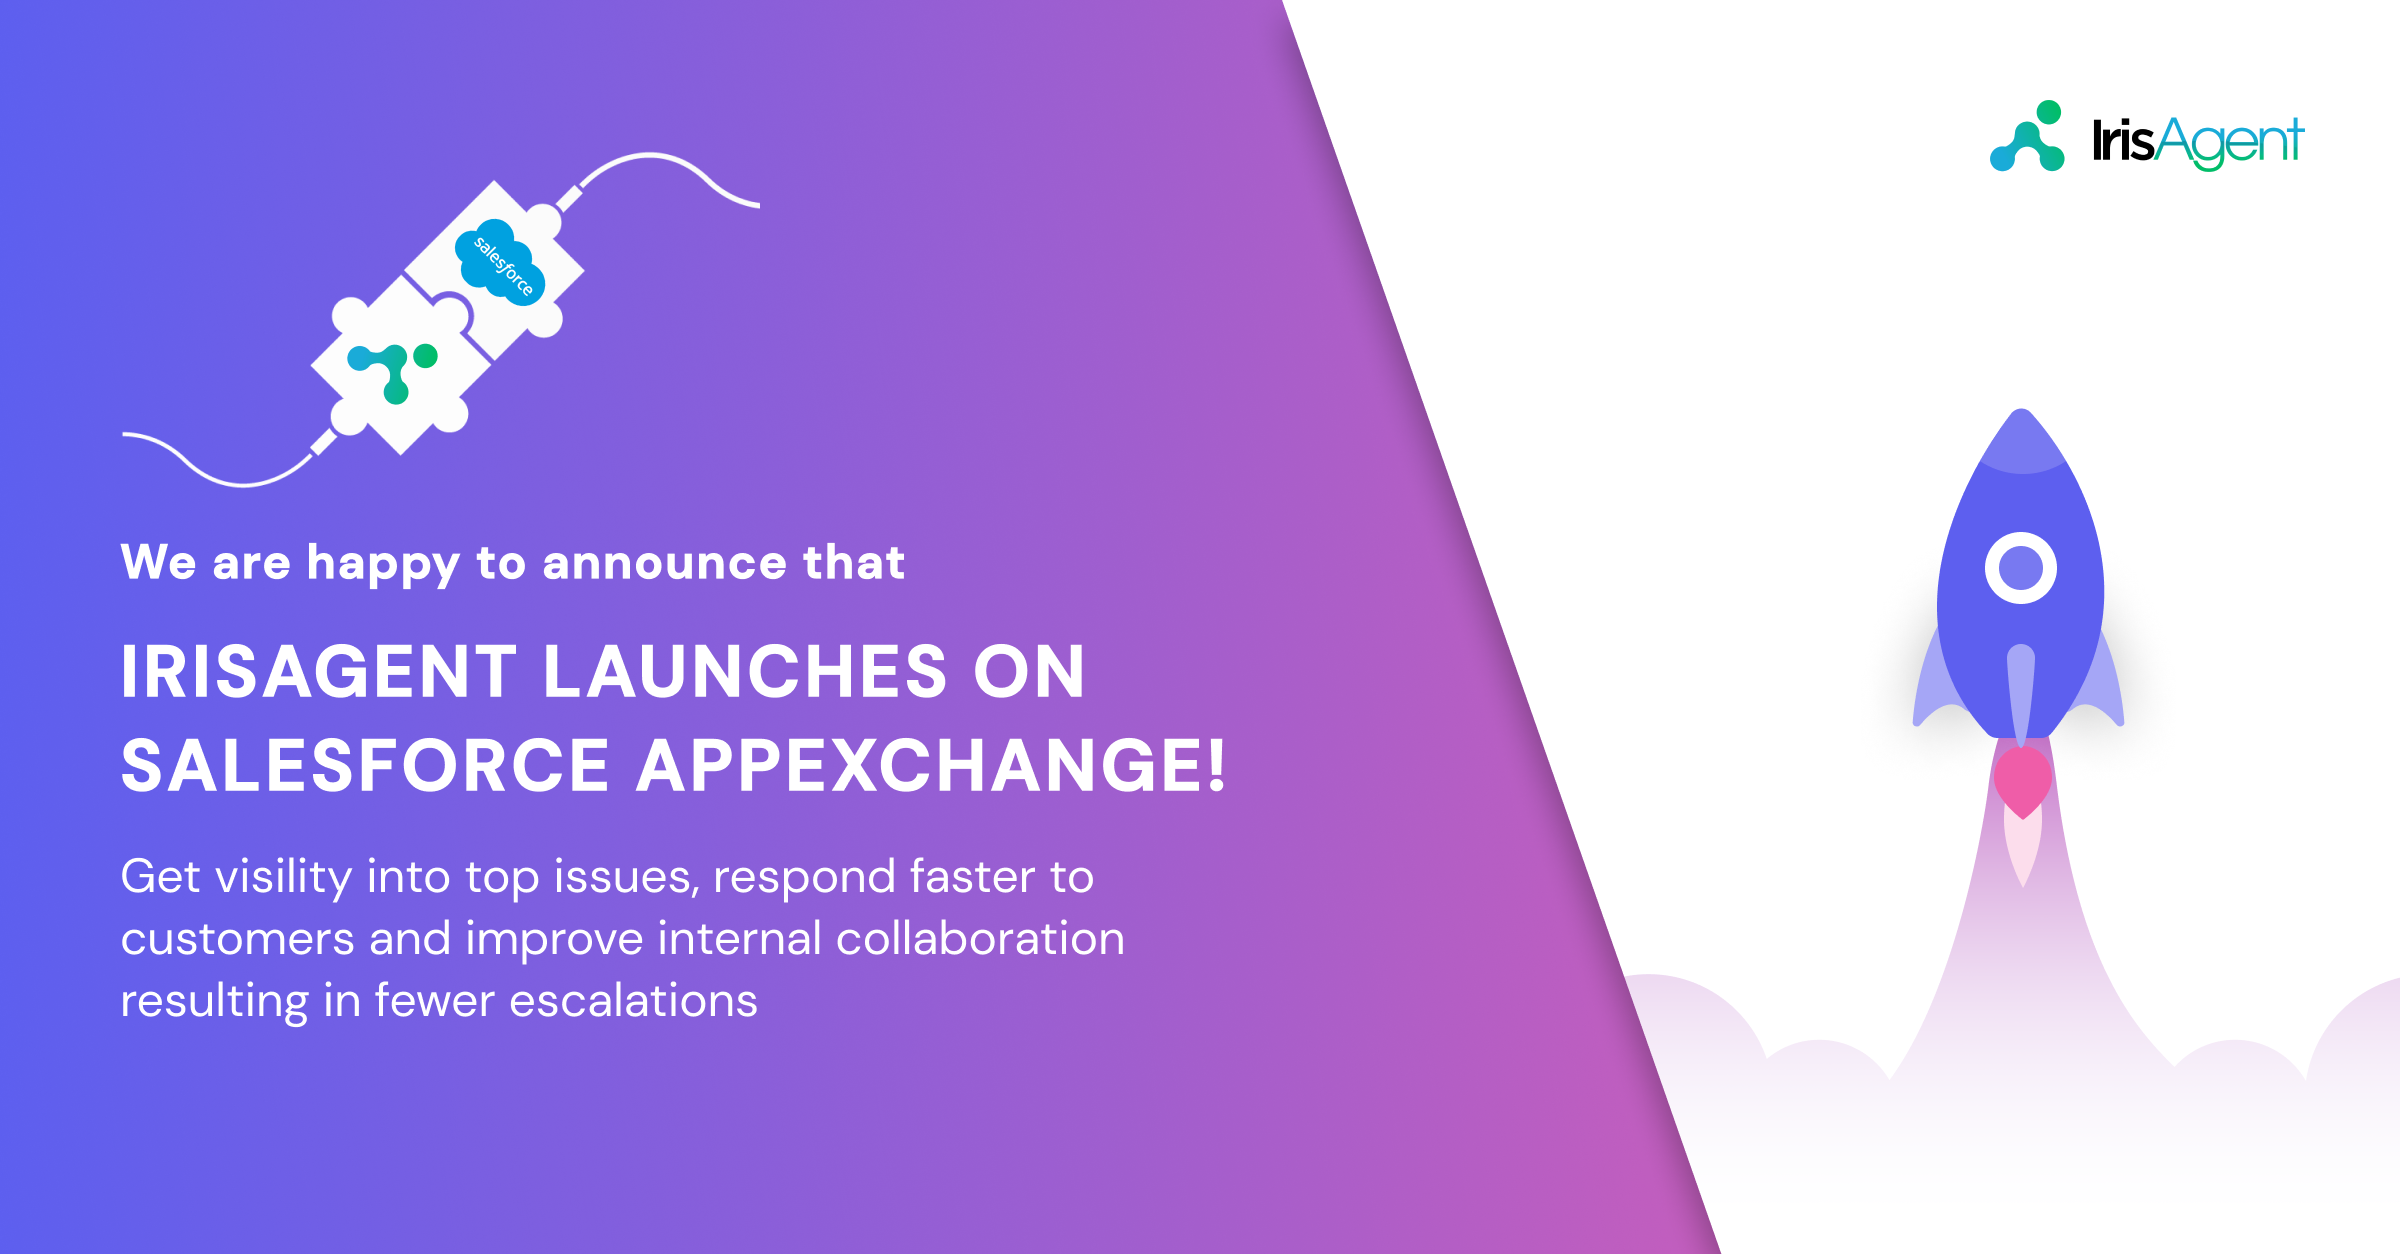 IrisAgent launches on Salesforce AppExchange